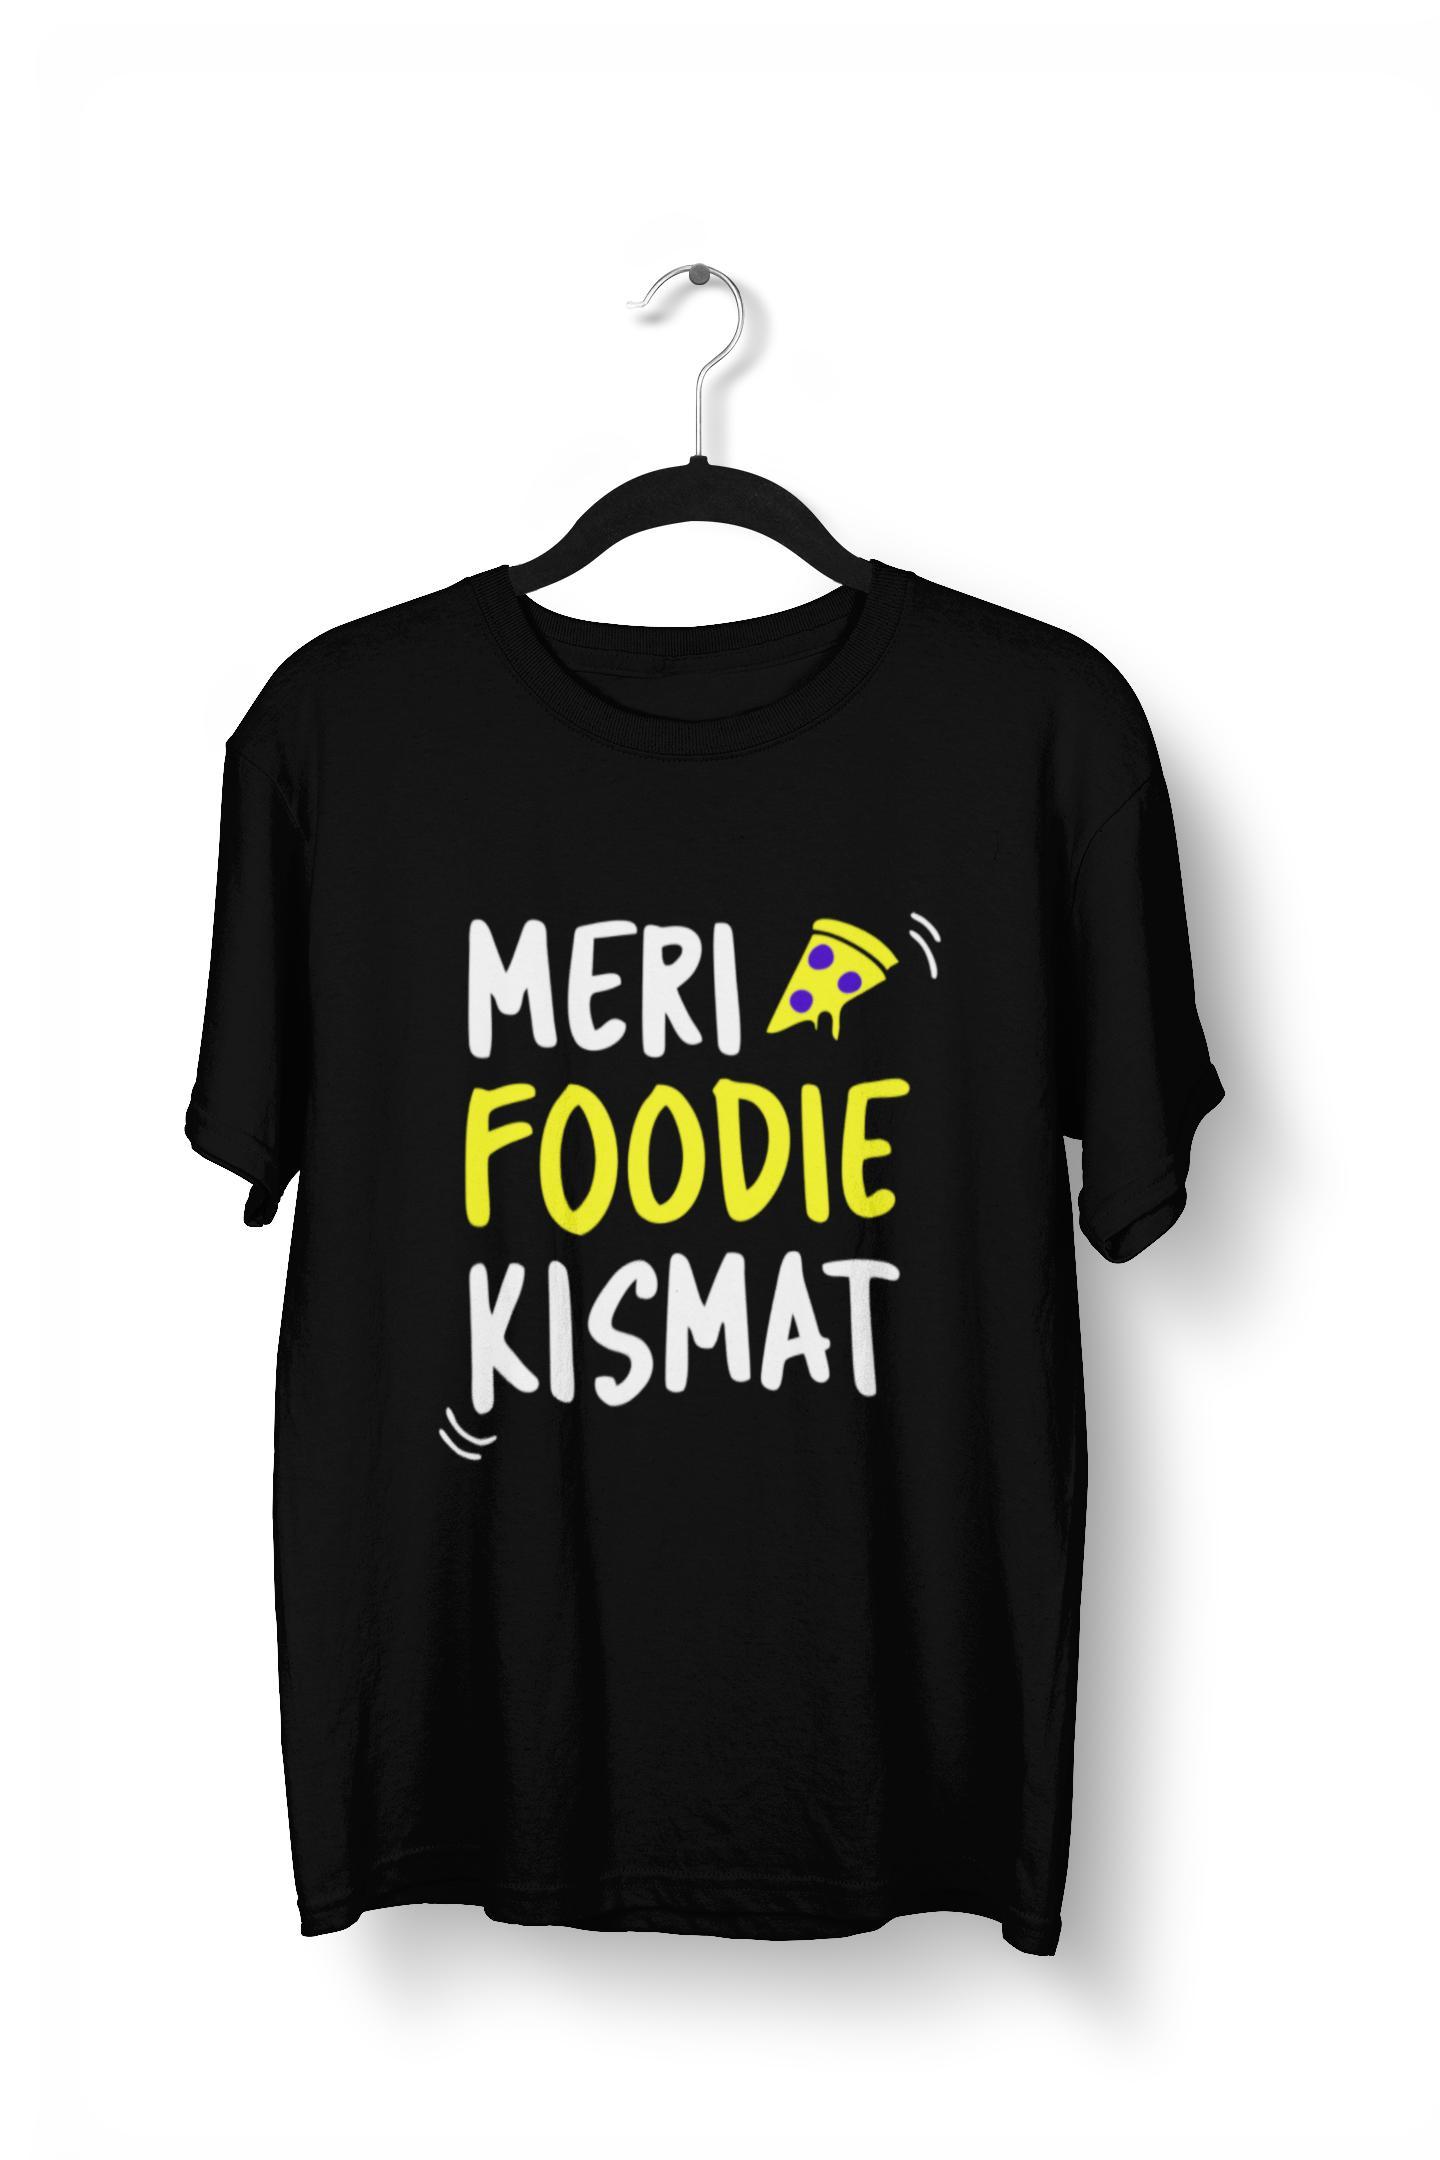 Meri Foodie Kismat T-Shirt - Insane Tees